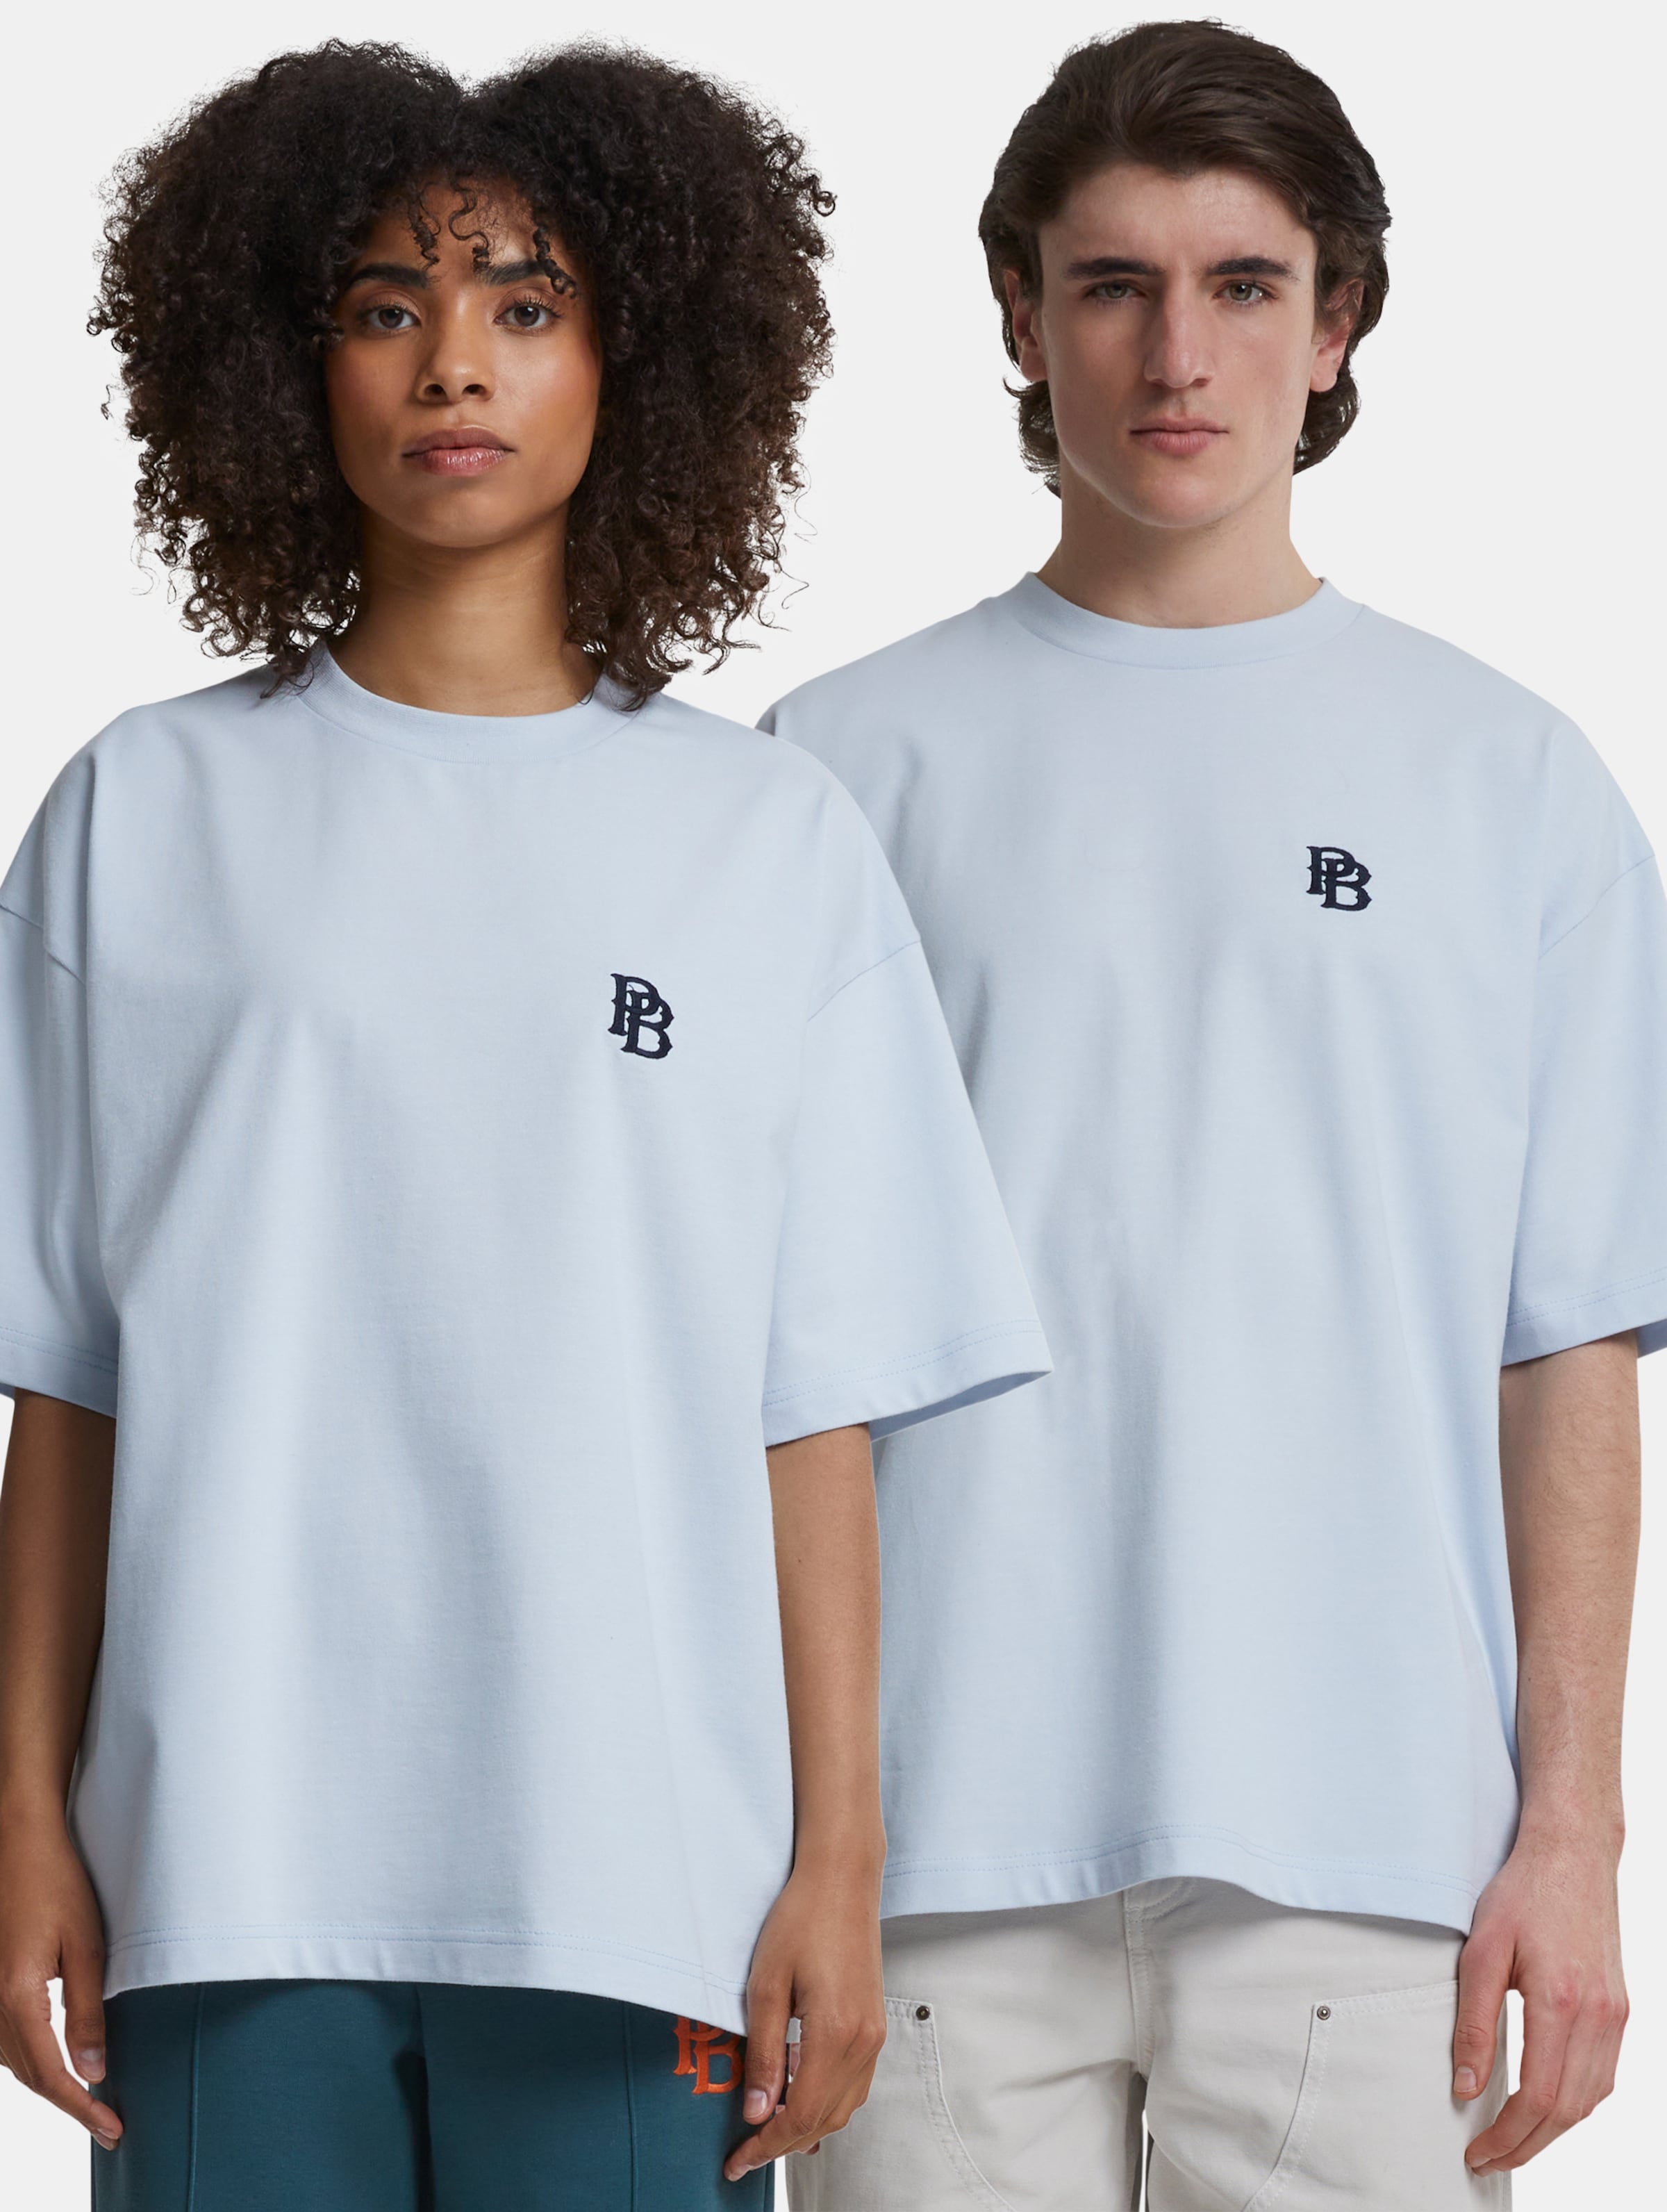 Prohibited Pitch T-Shirts Frauen,Männer,Unisex op kleur blauw, Maat XS